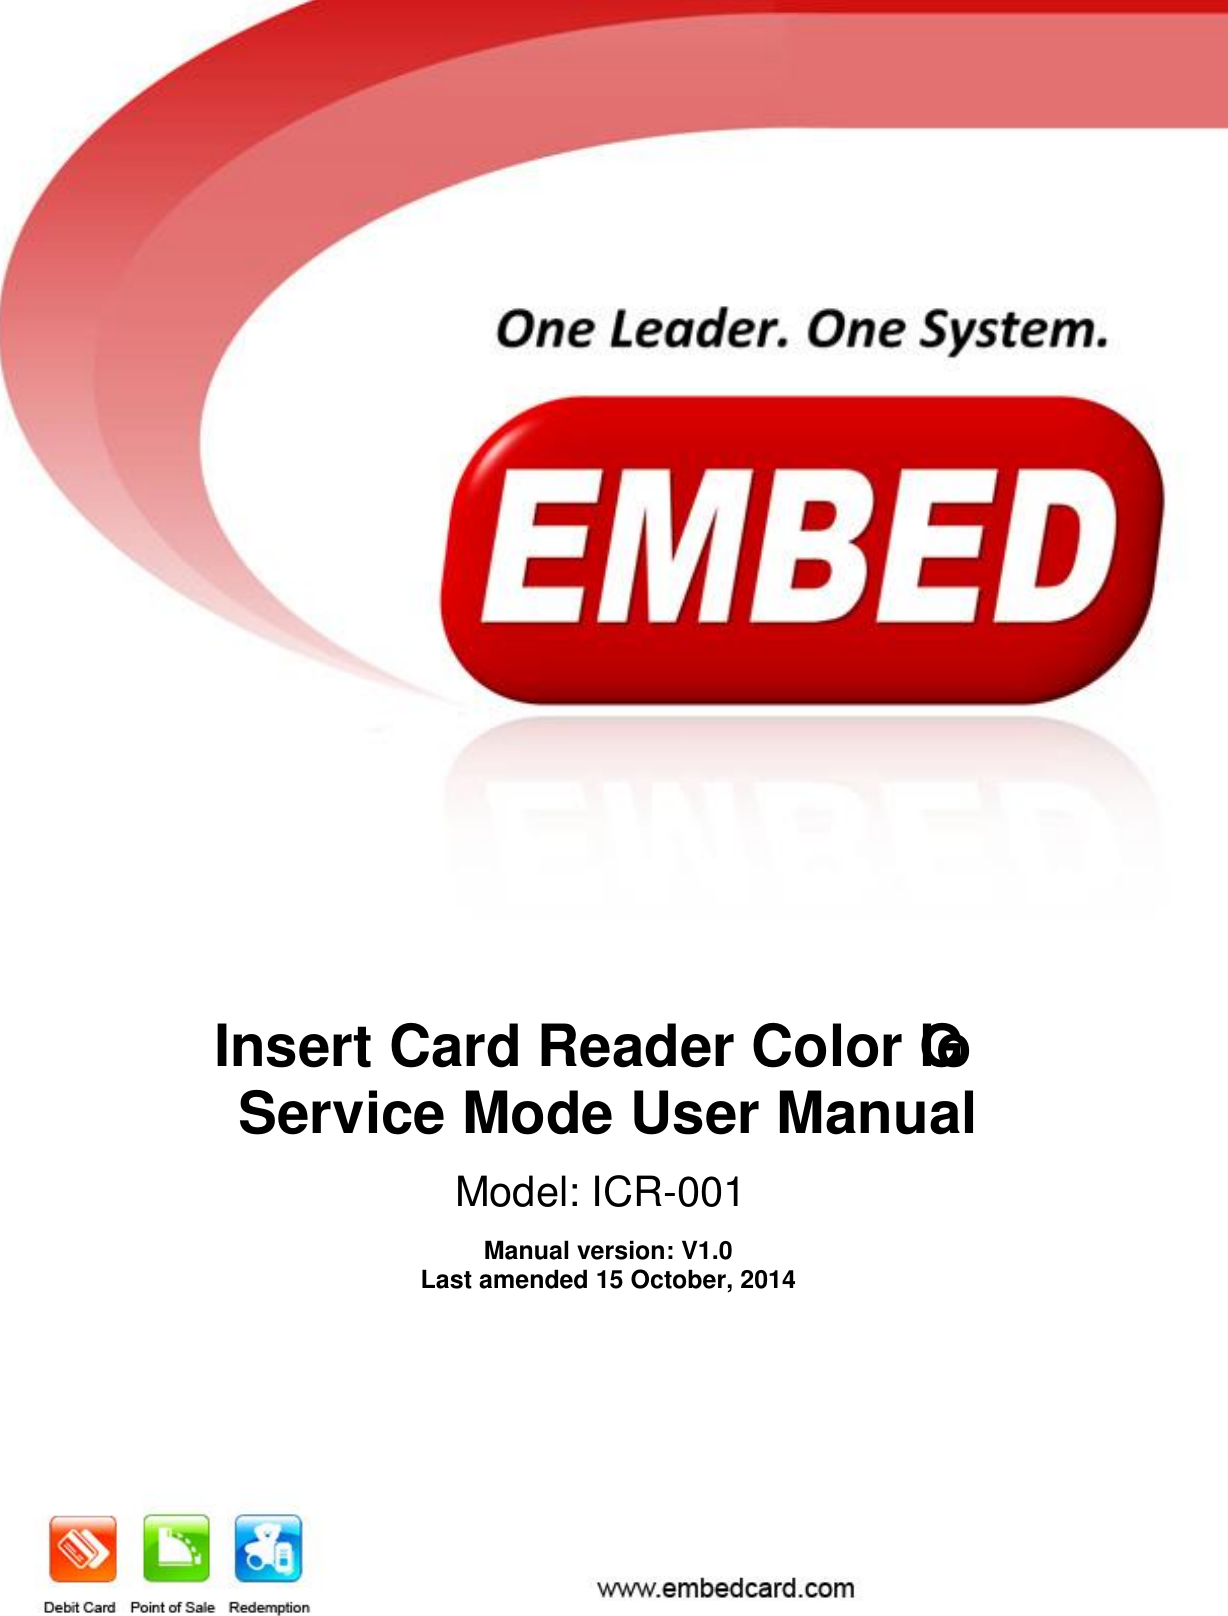          Insert Card Reader Color Glo  Service Mode User Manual   Manual version: V1.0 Last amended 15 October, 2014  Model: ICR-001